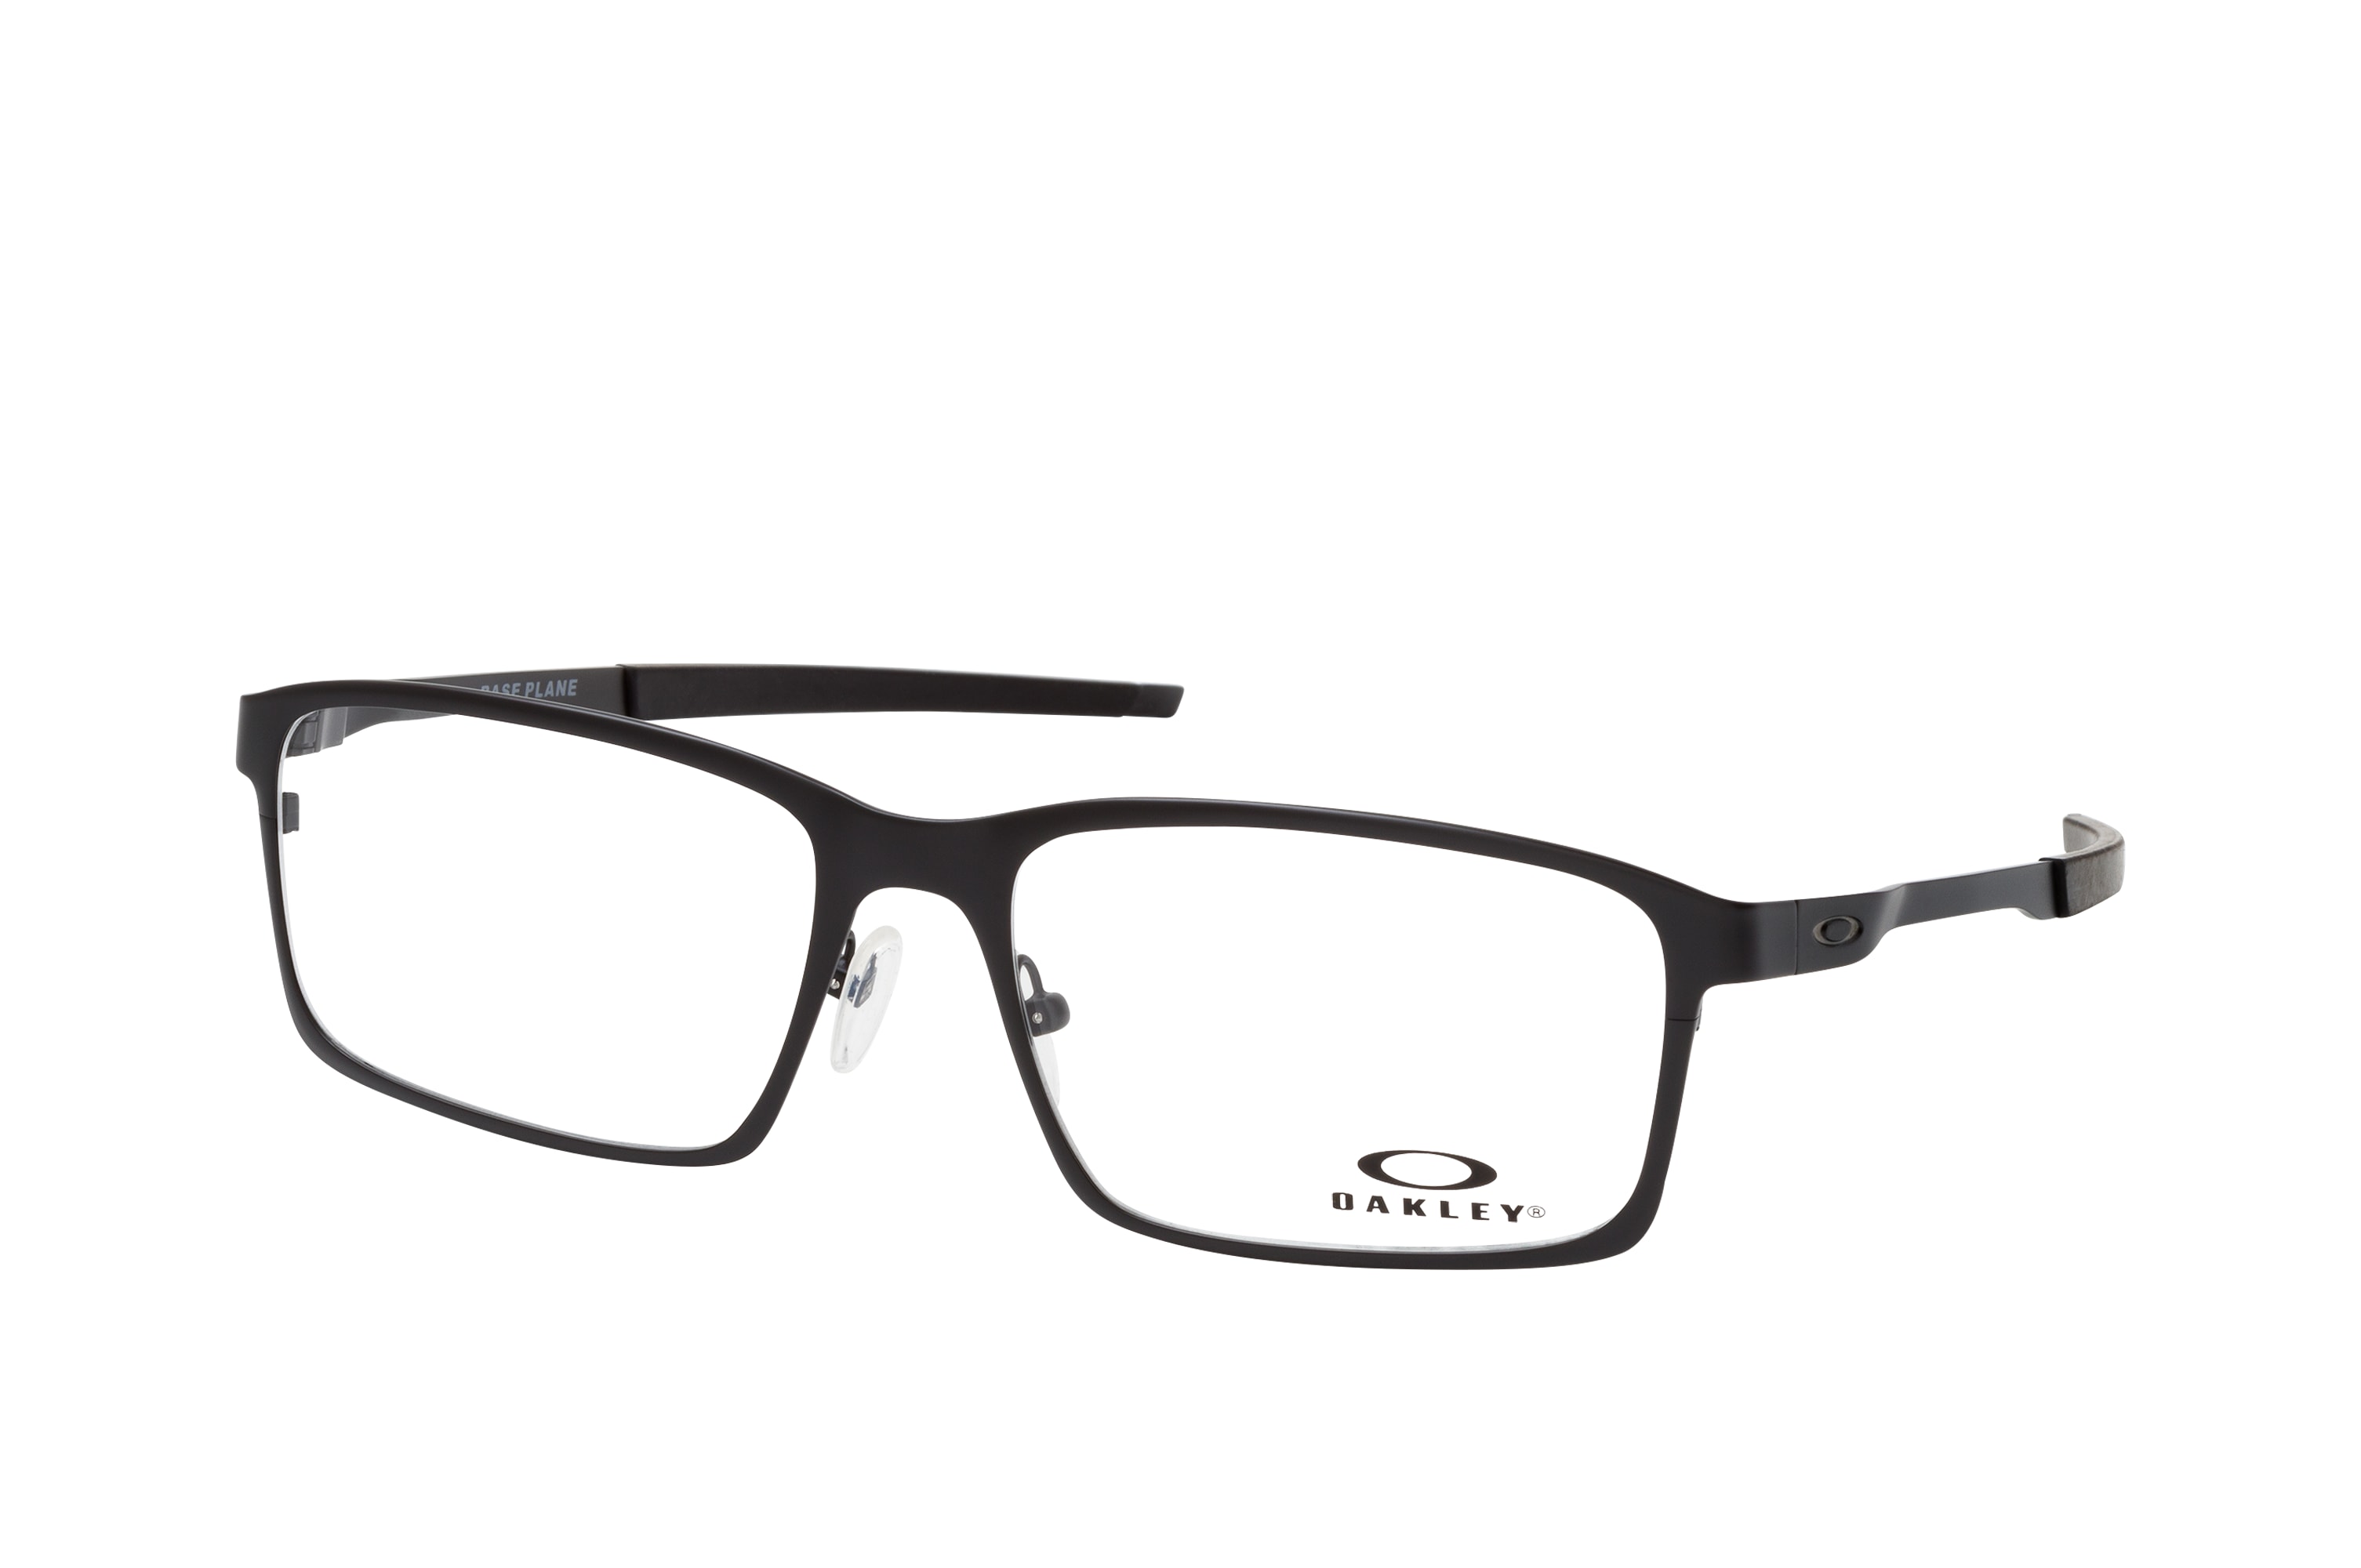 Buy Oakley BASE PLANE OX 3232 01 Glasses